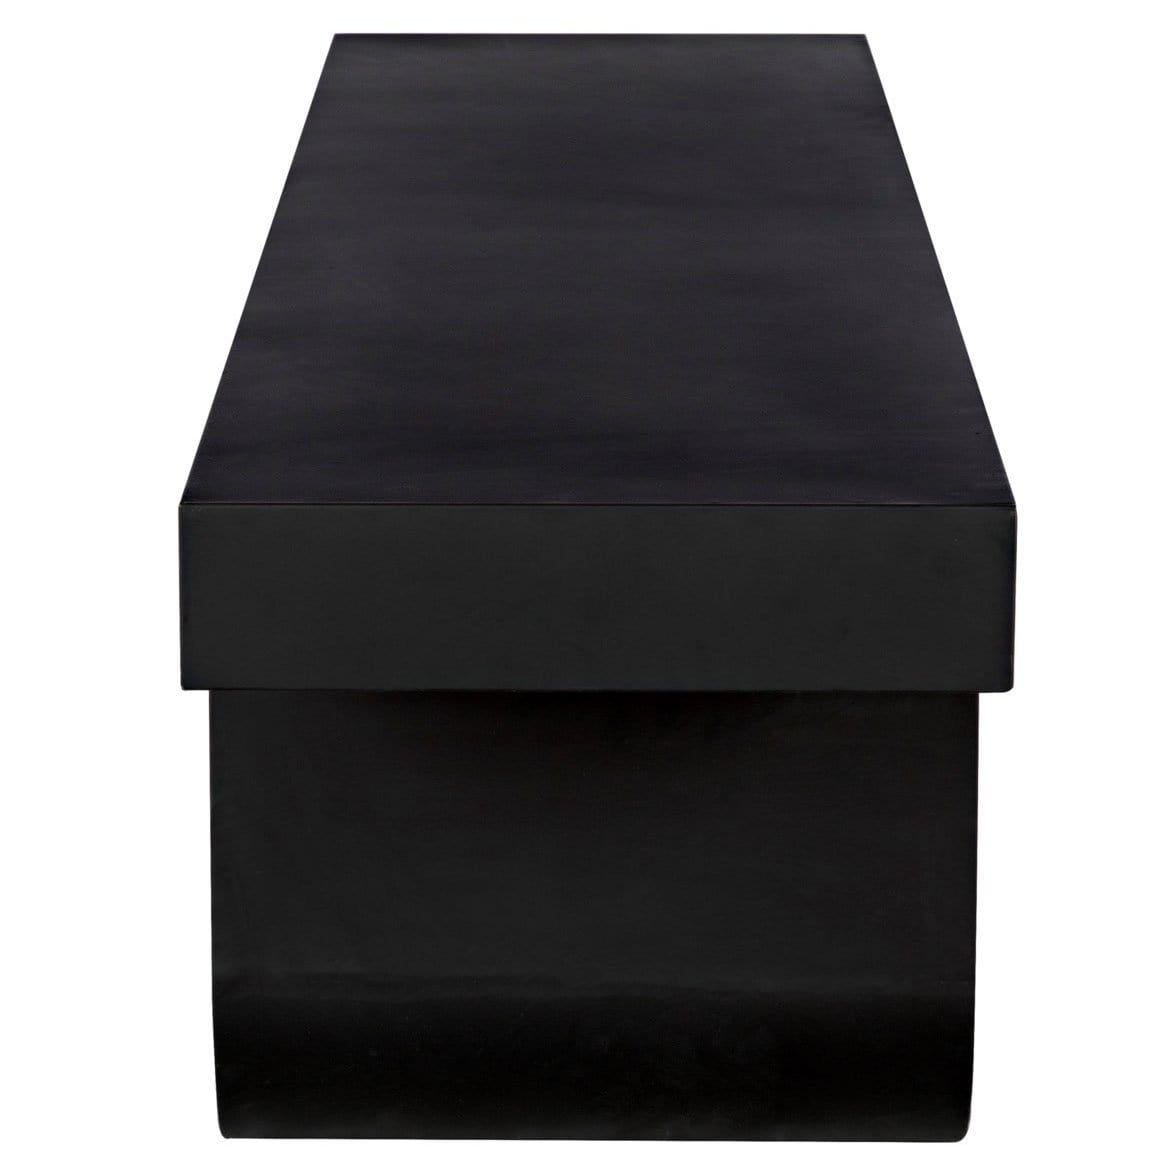 Noir Evora Coffee Table - HOLD FOR PRICING Furniture noir-GTAB1108MTB